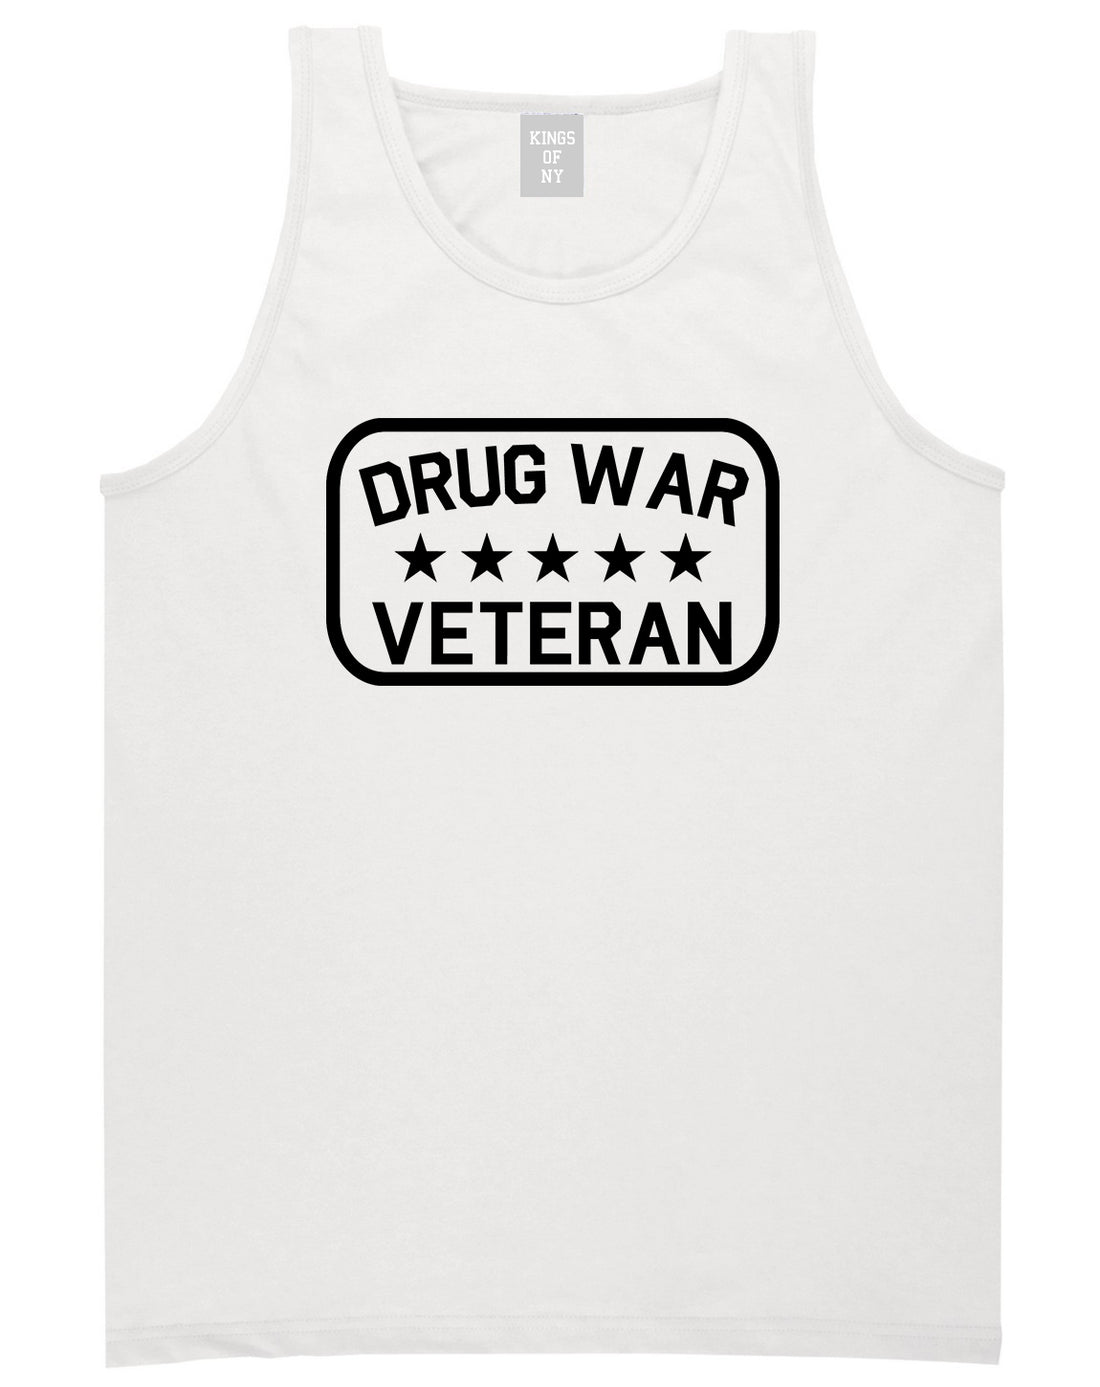 Drug_War_Veteran Mens White Tank Top Shirt by Kings Of NY